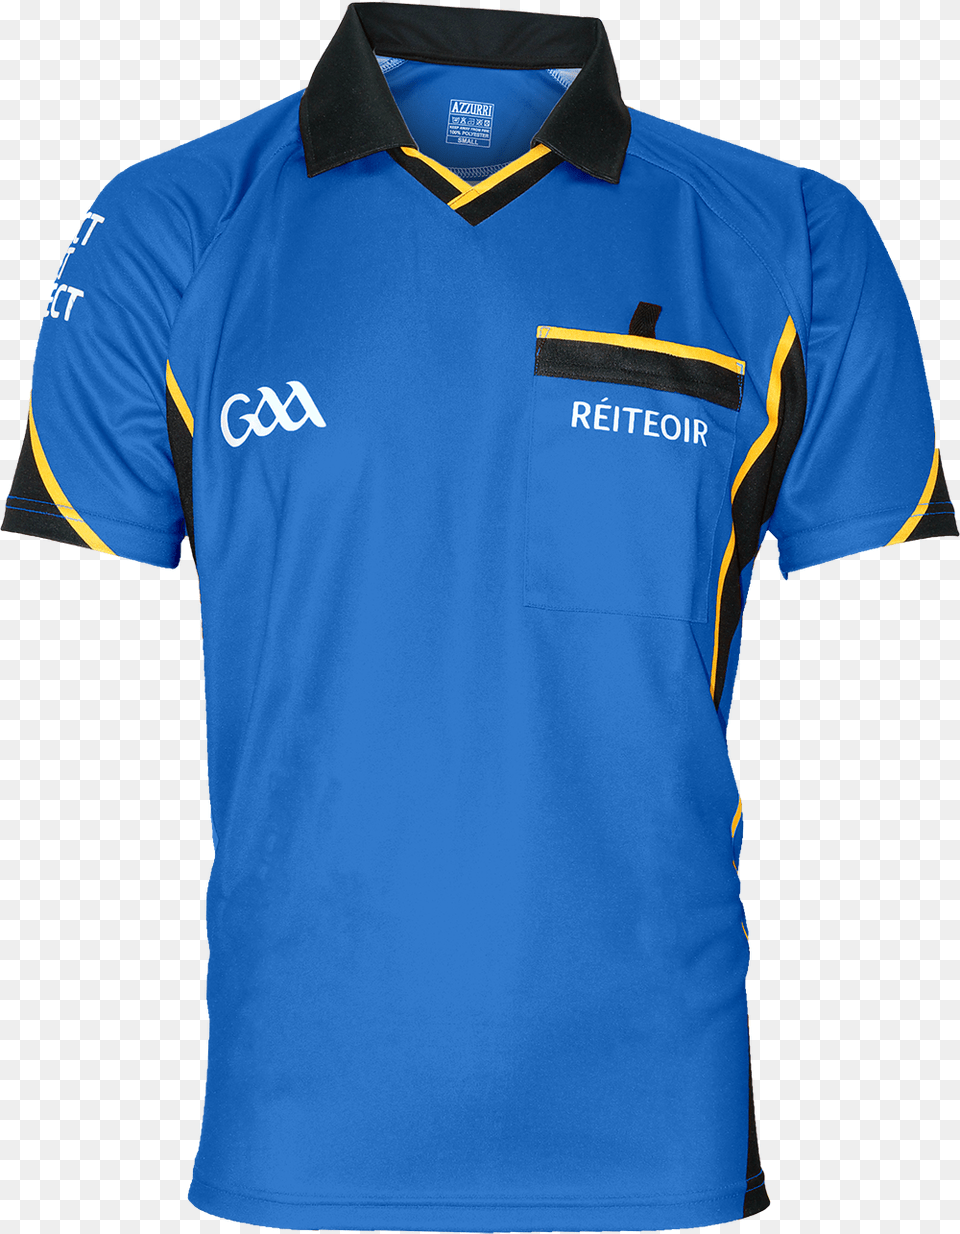 Referee Jersey Jg239 Shirt, Clothing Free Png